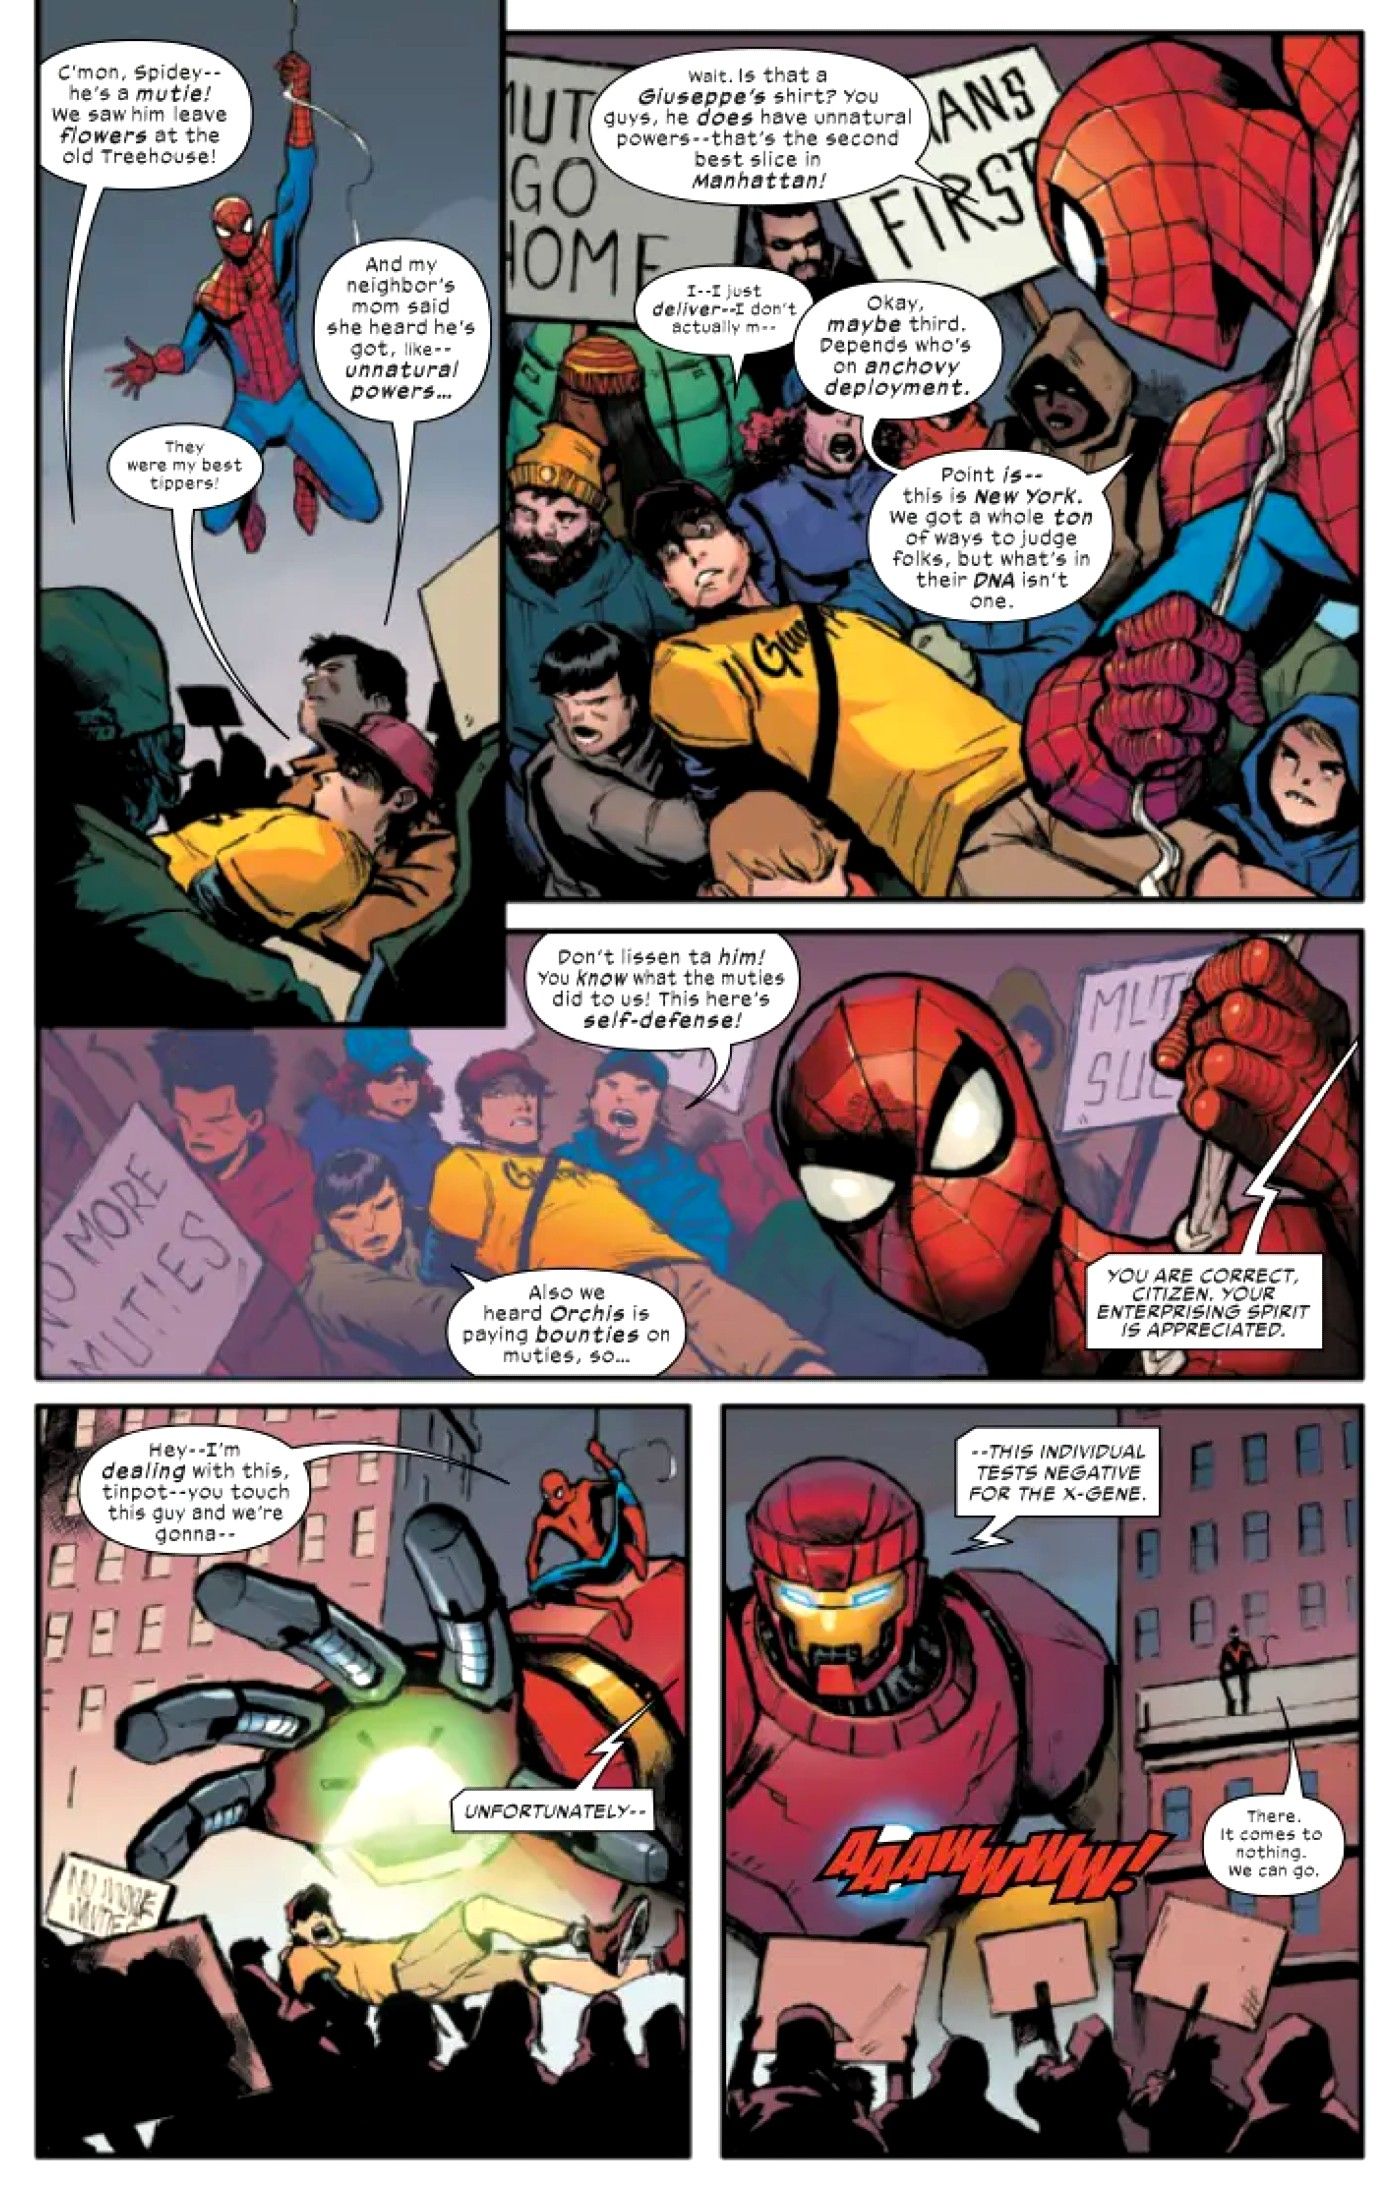 Spider-Man : Page 2 : Target